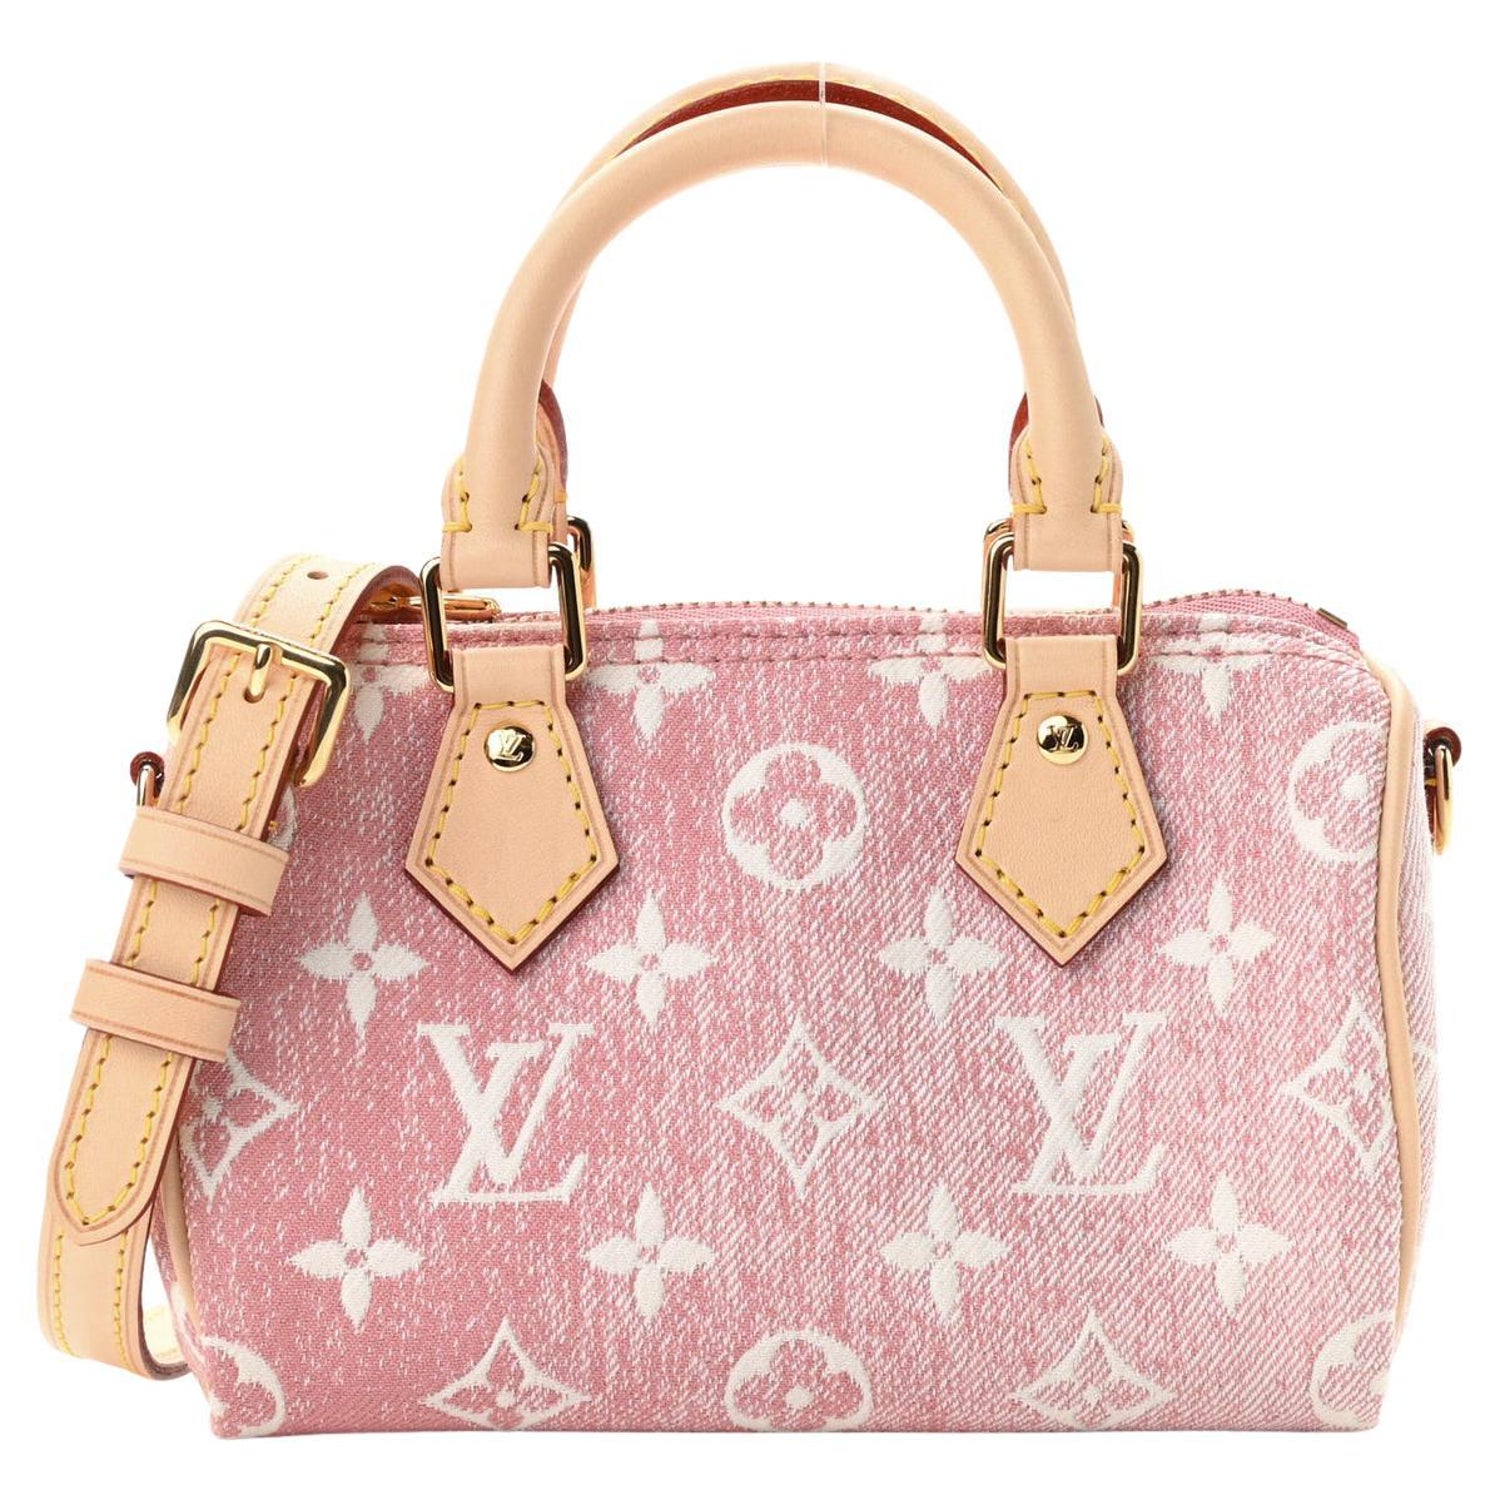 Louis Vuitton - Authenticated Nano Speedy / Mini HL Handbag - Cloth Beige Plain For Woman, Never Worn, with Tag